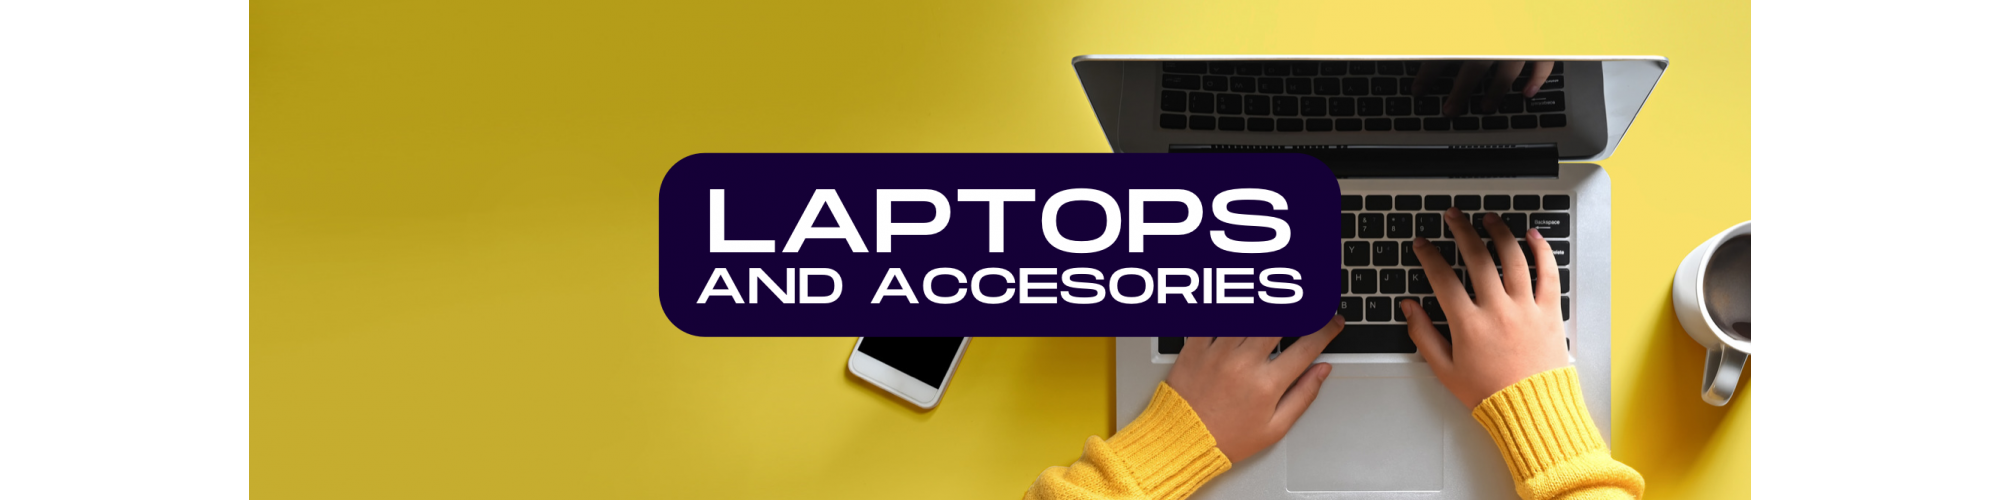 Laptops e Acessórios